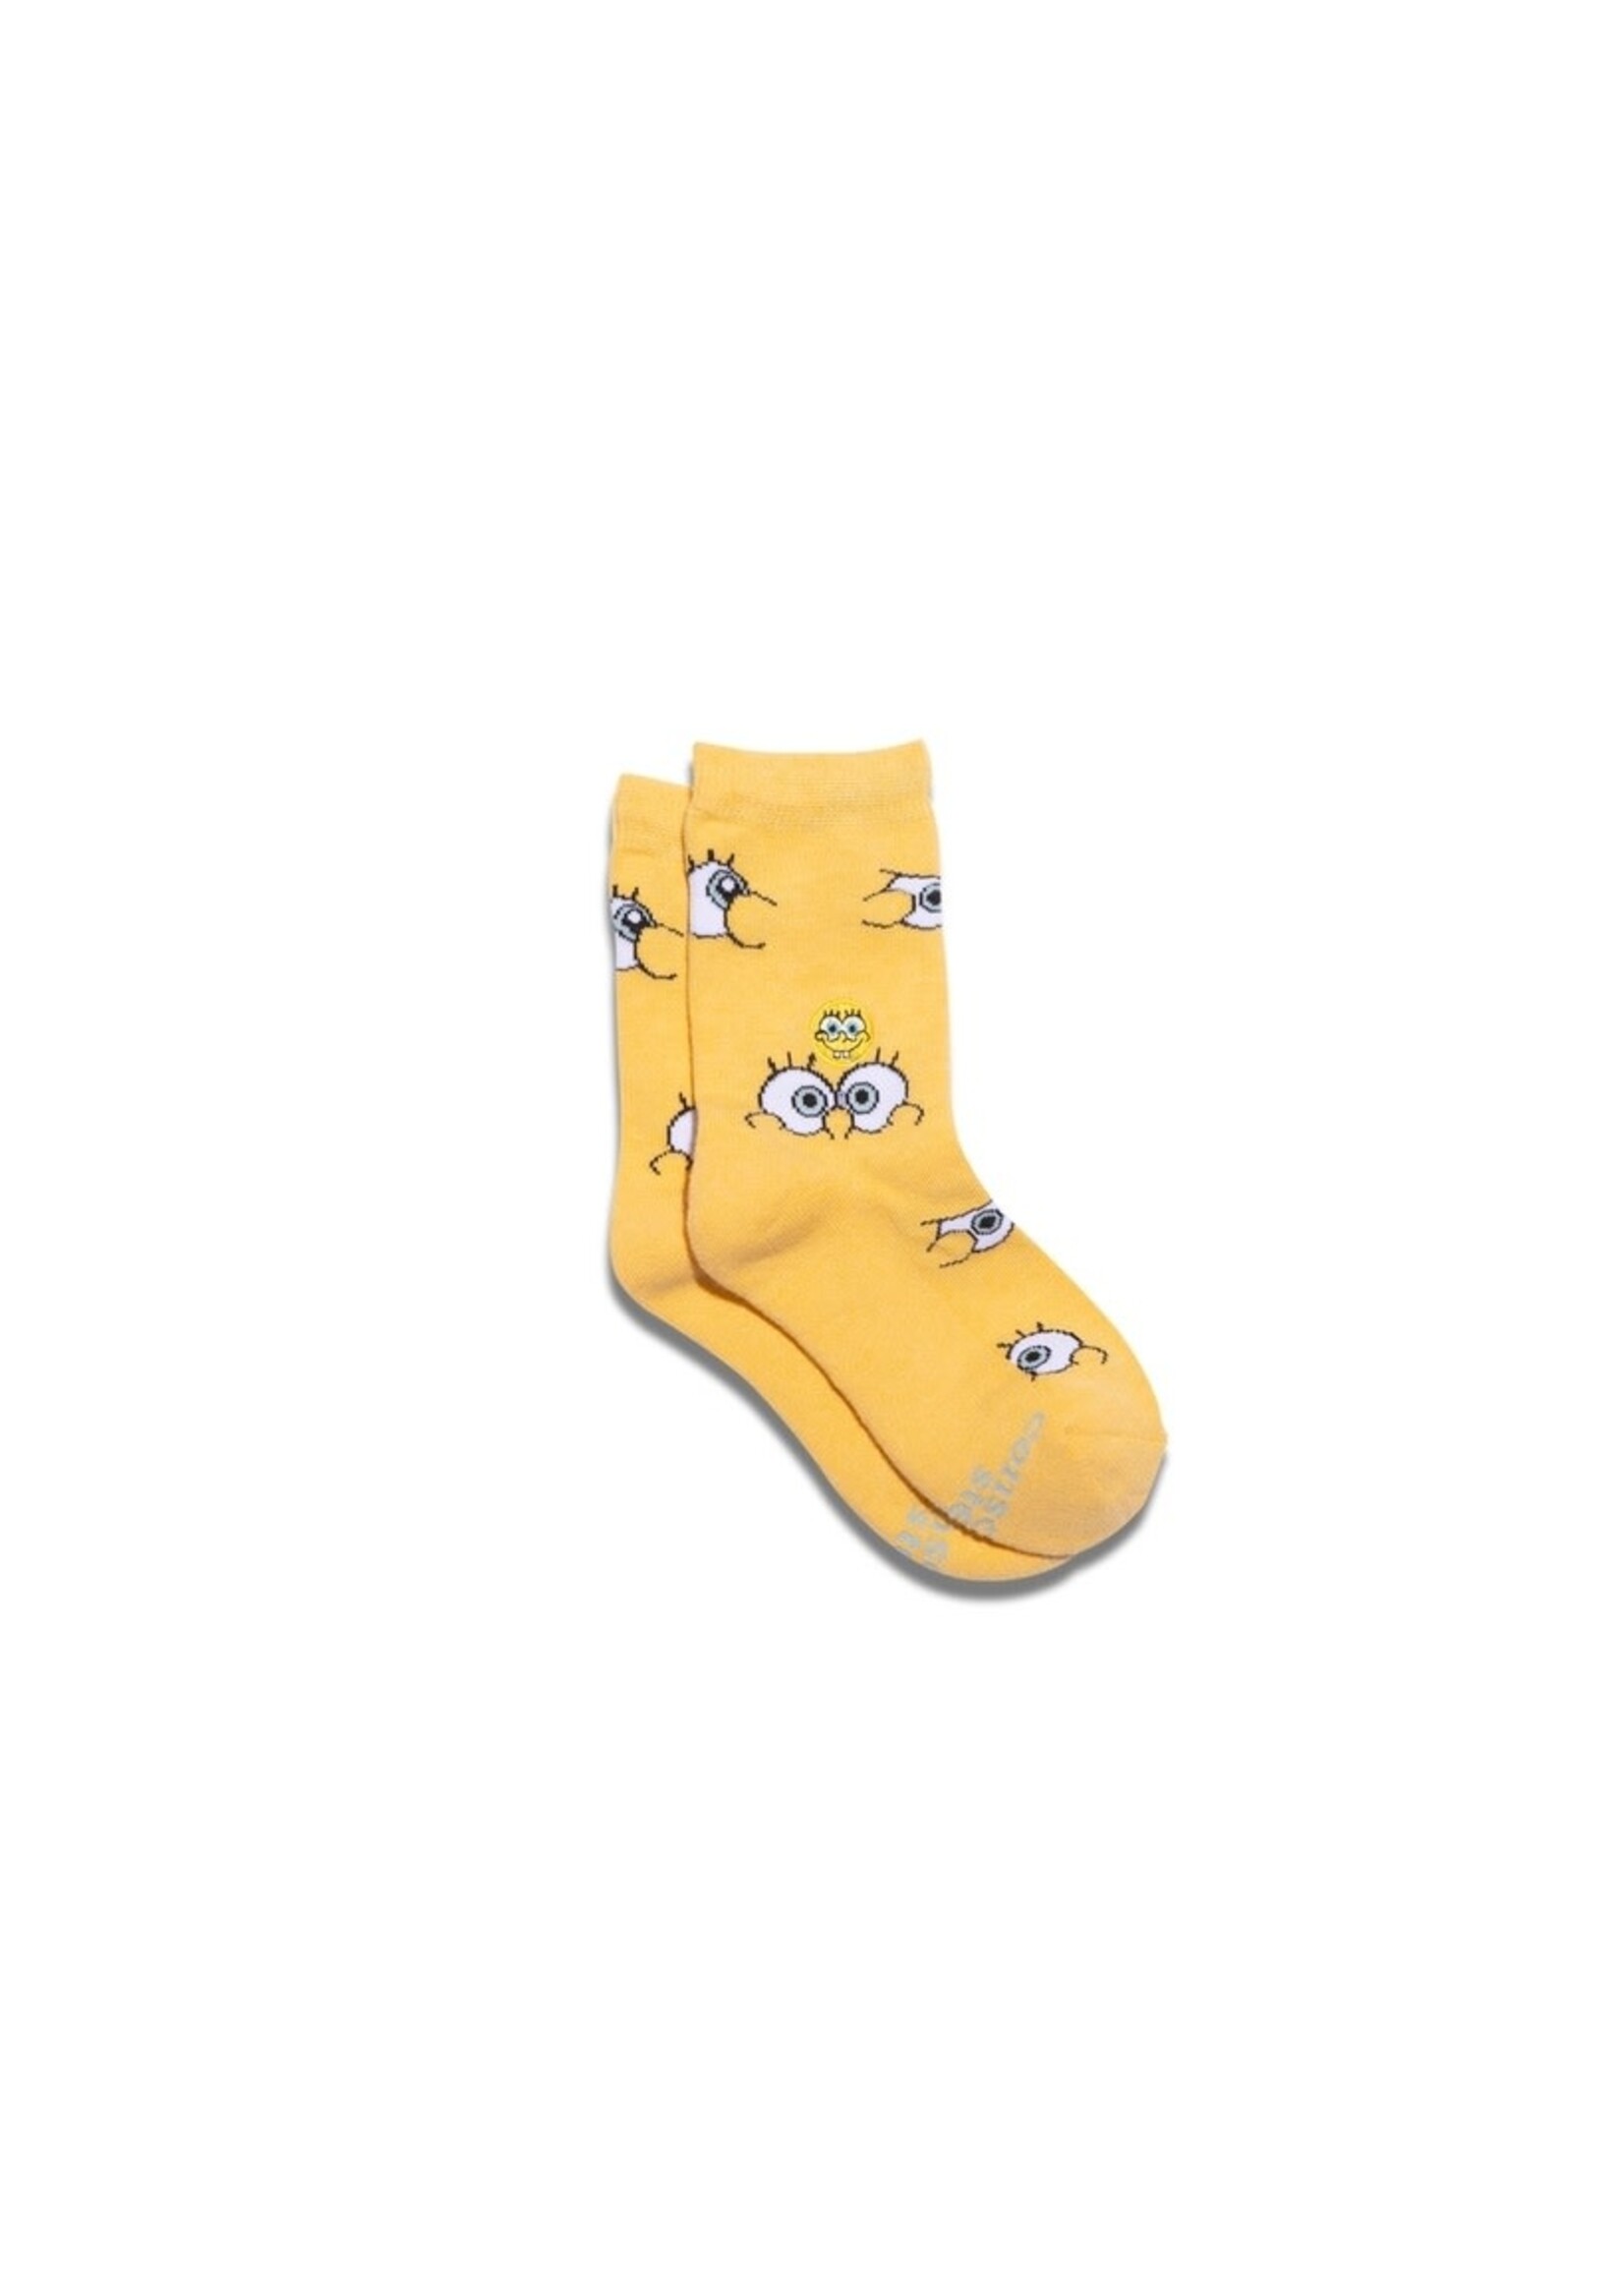 Kids Socks - Protect Oceans Spongebob